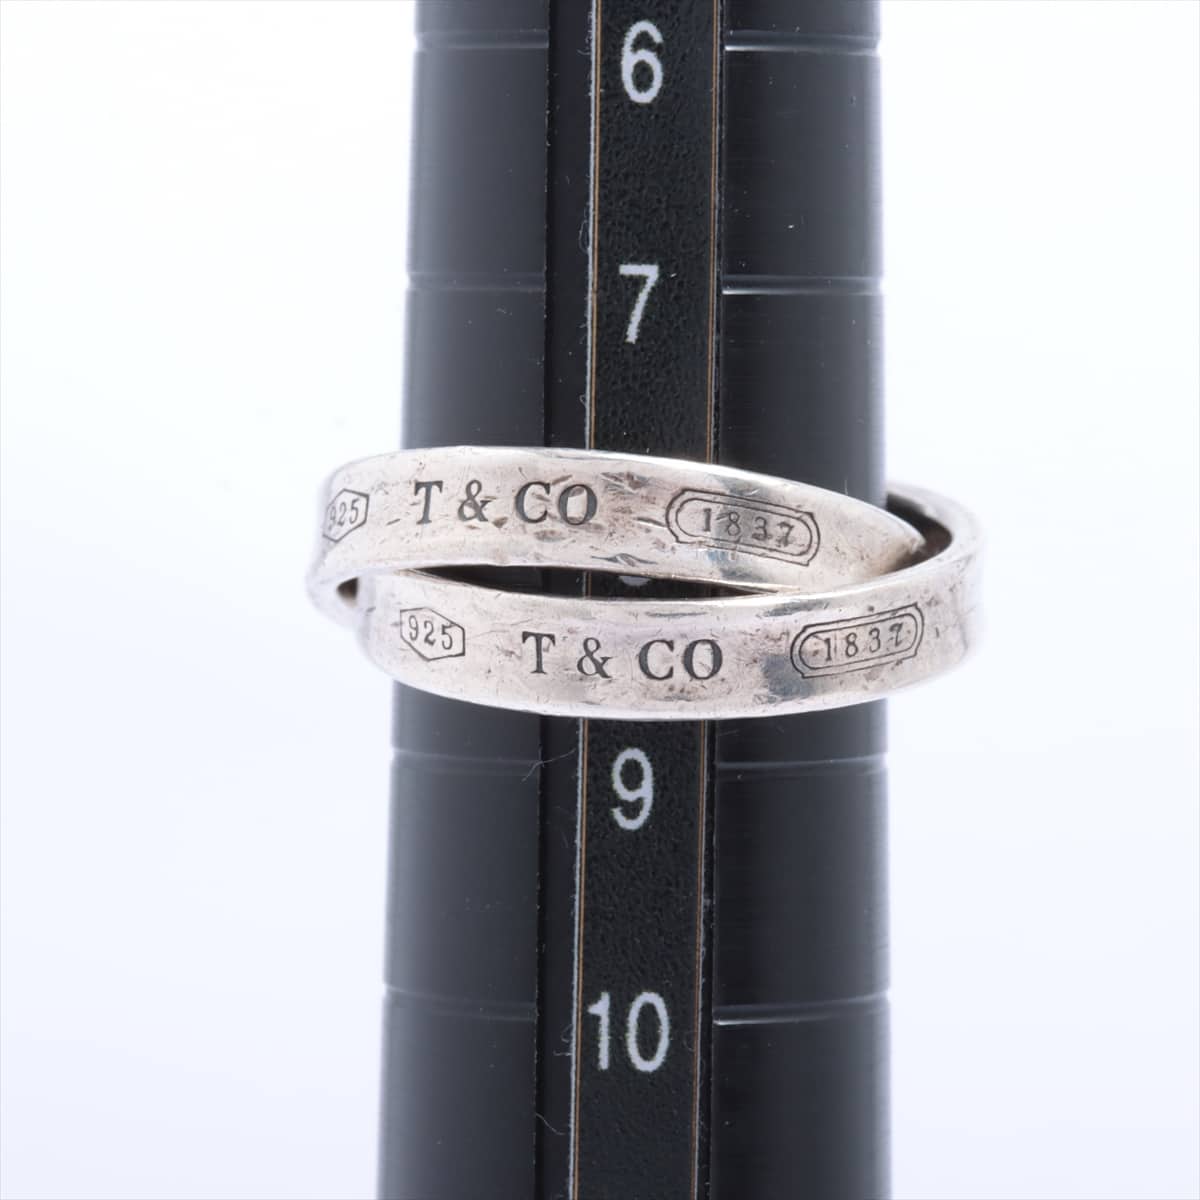 Tiffany 1837 Interlocking Circle rings 925 4.9g Silver